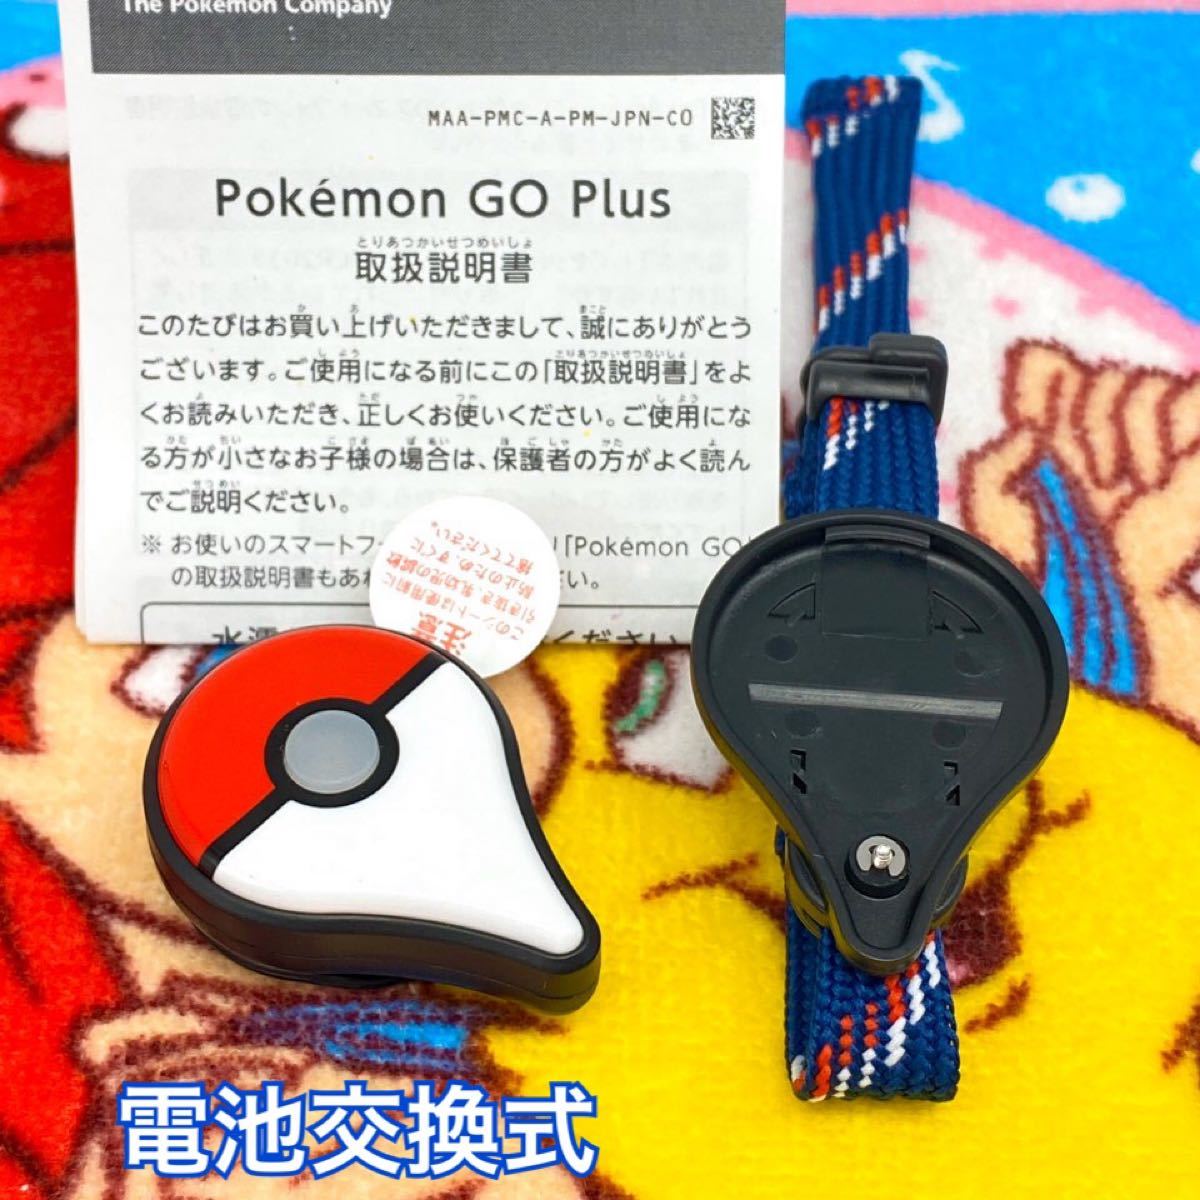 Paypayフリマ 新品 ポケモンgoプラス Pokemon Go Plus 並行輸入品